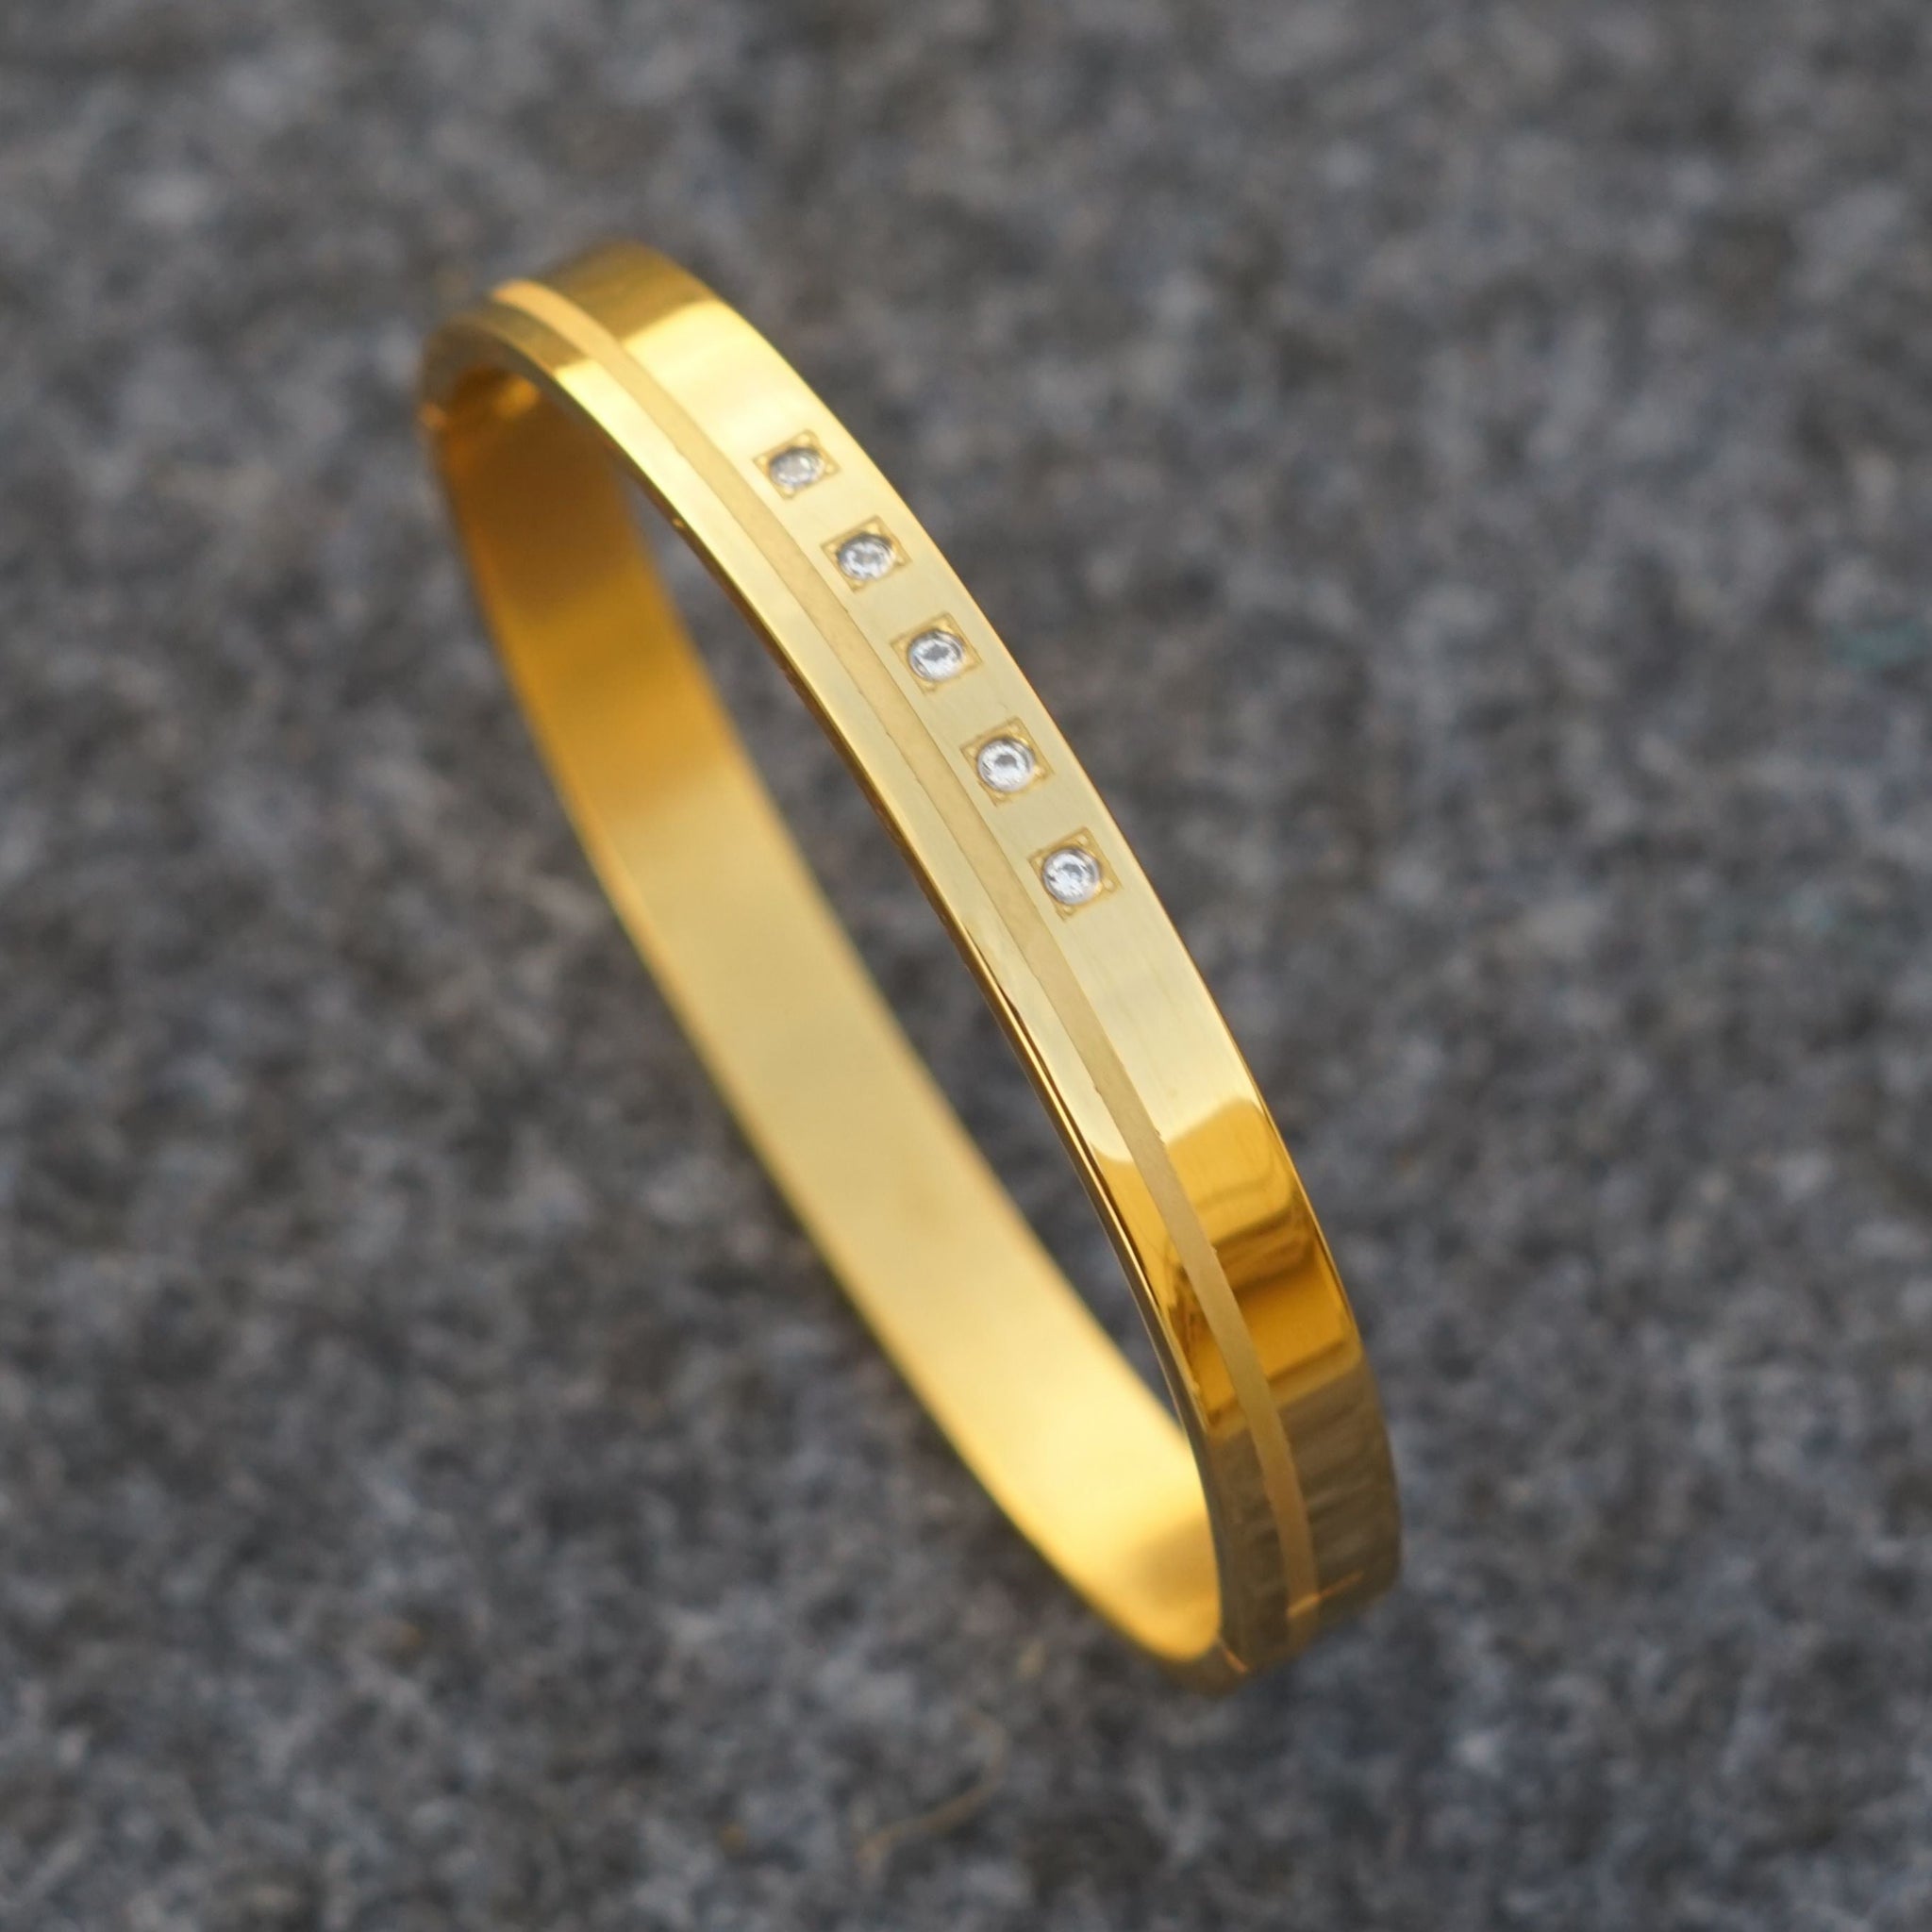 The Roman Numeral Bracelet – The Essentials Brand